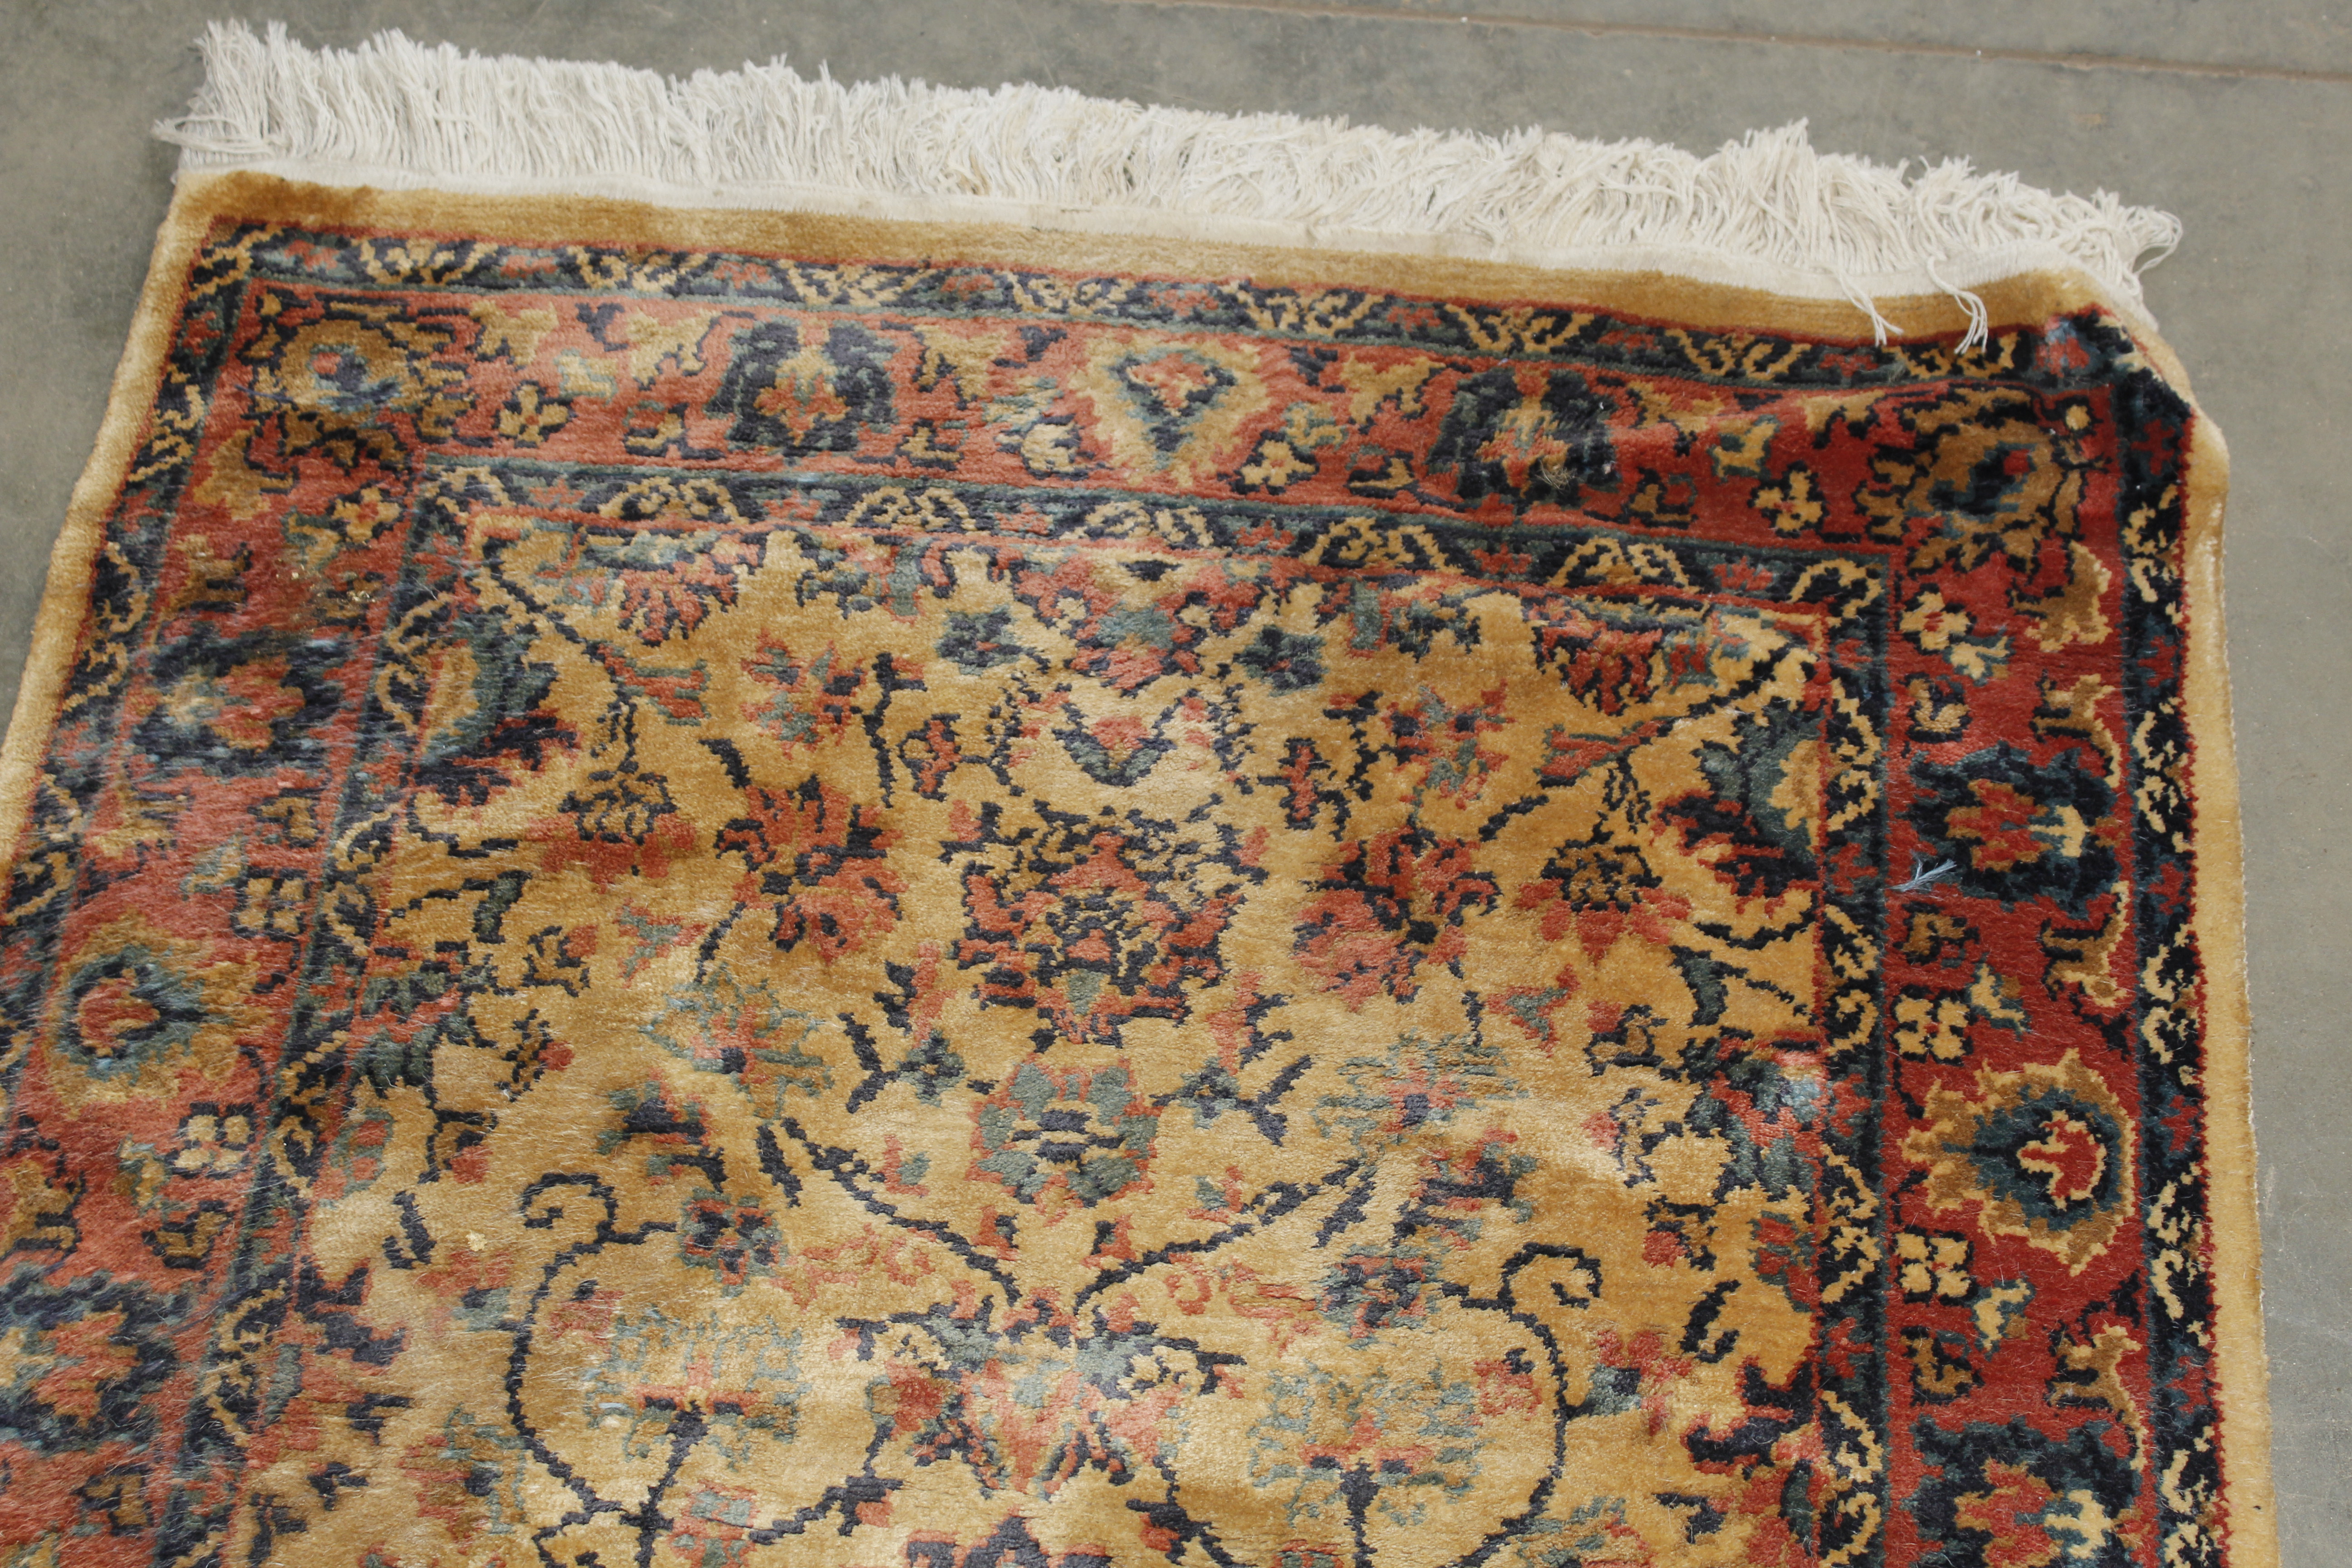 An approx. 5'3" x 3' floral patterned rug AF - Image 5 of 6